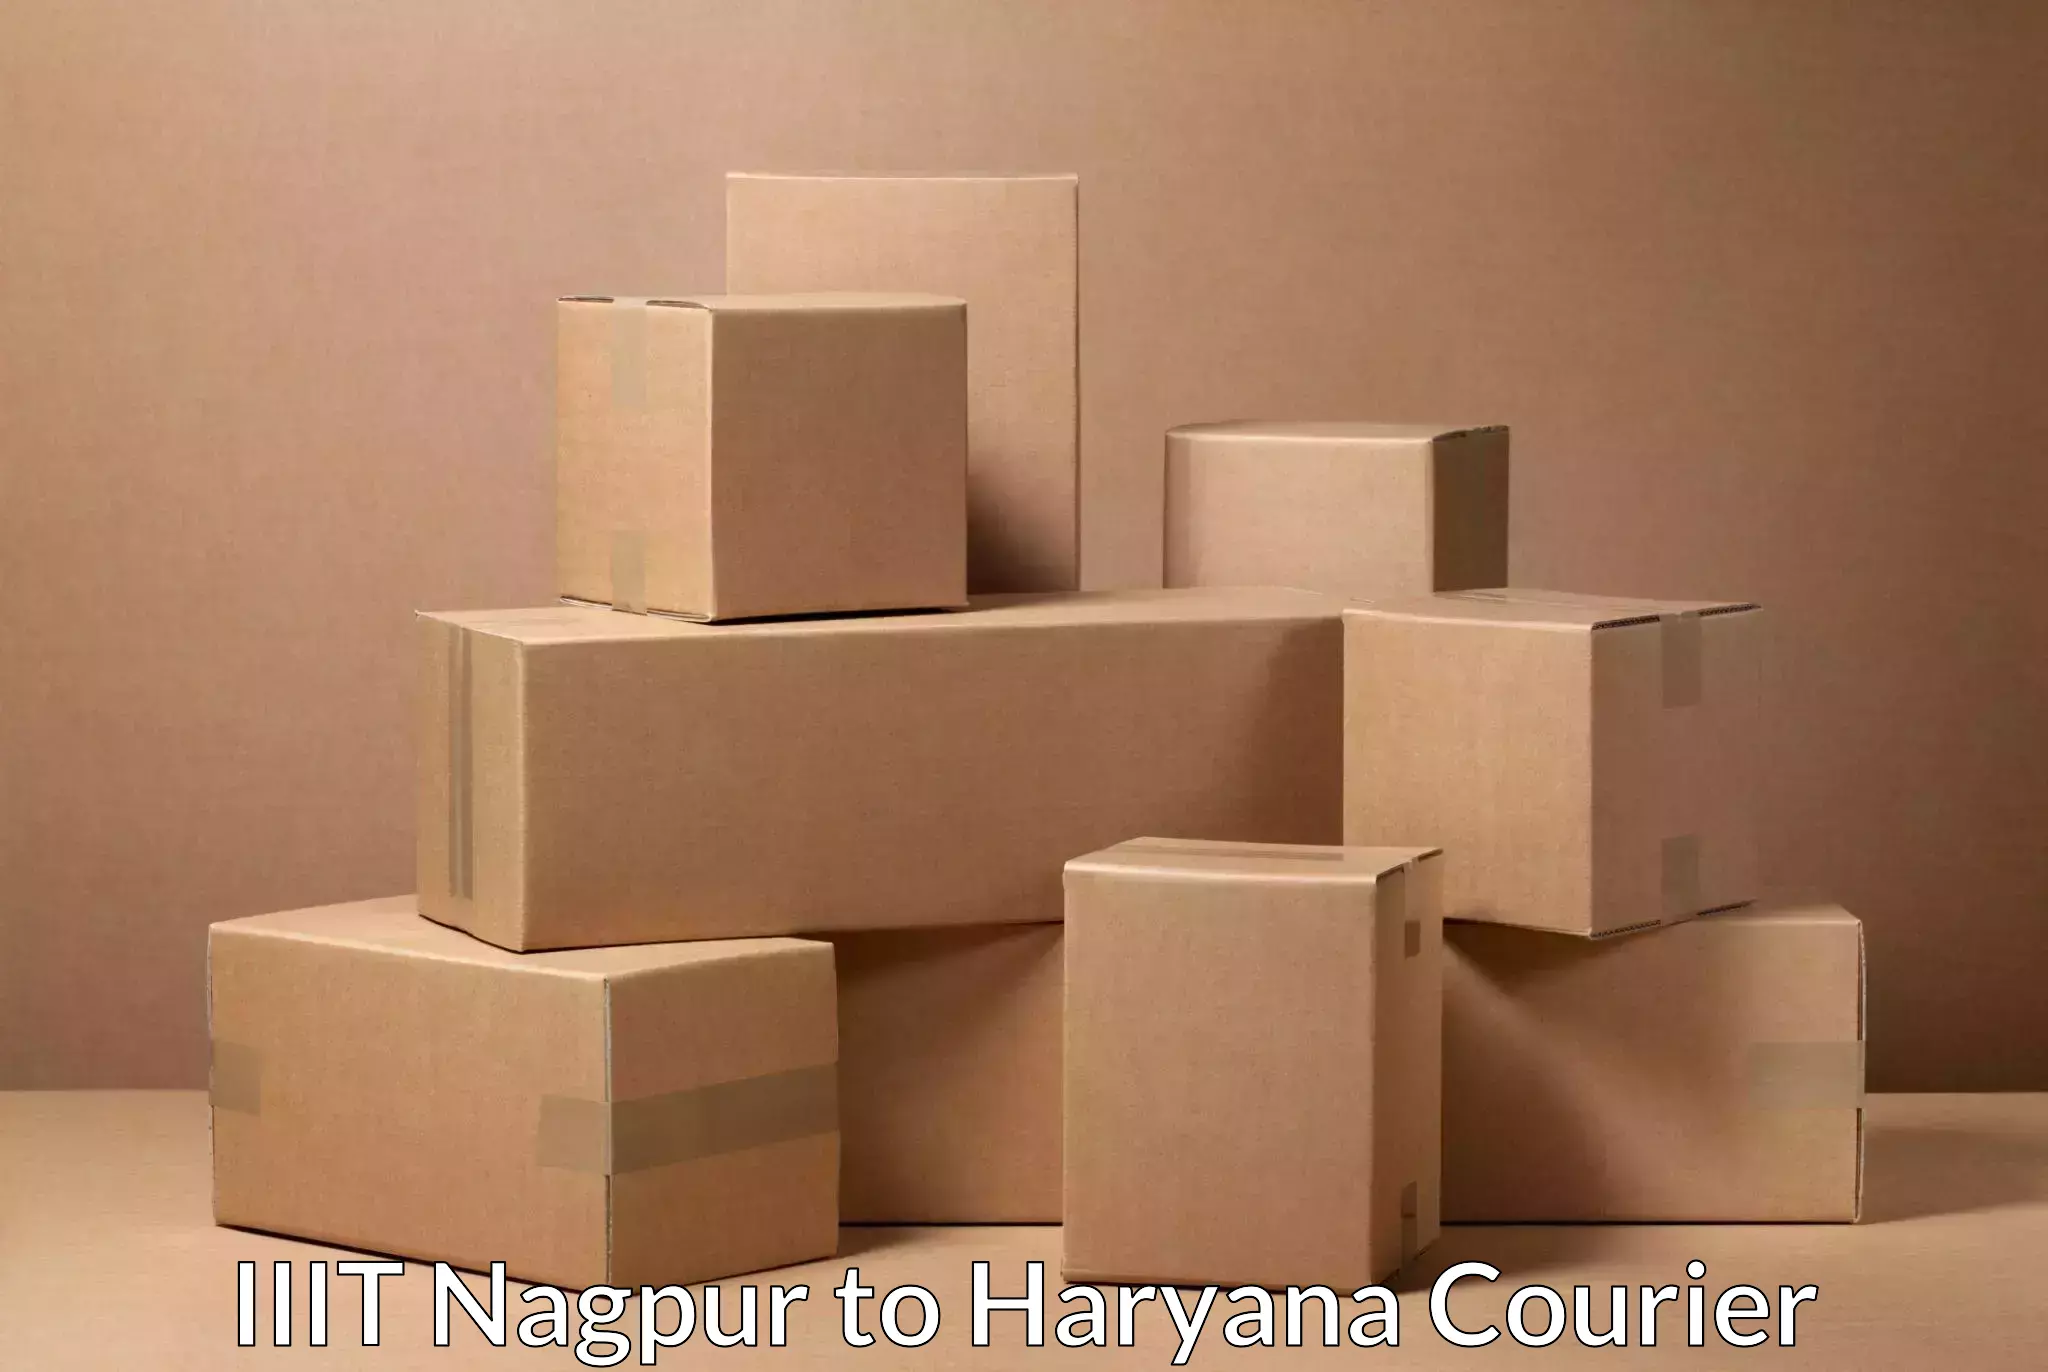 Courier insurance IIIT Nagpur to Haryana